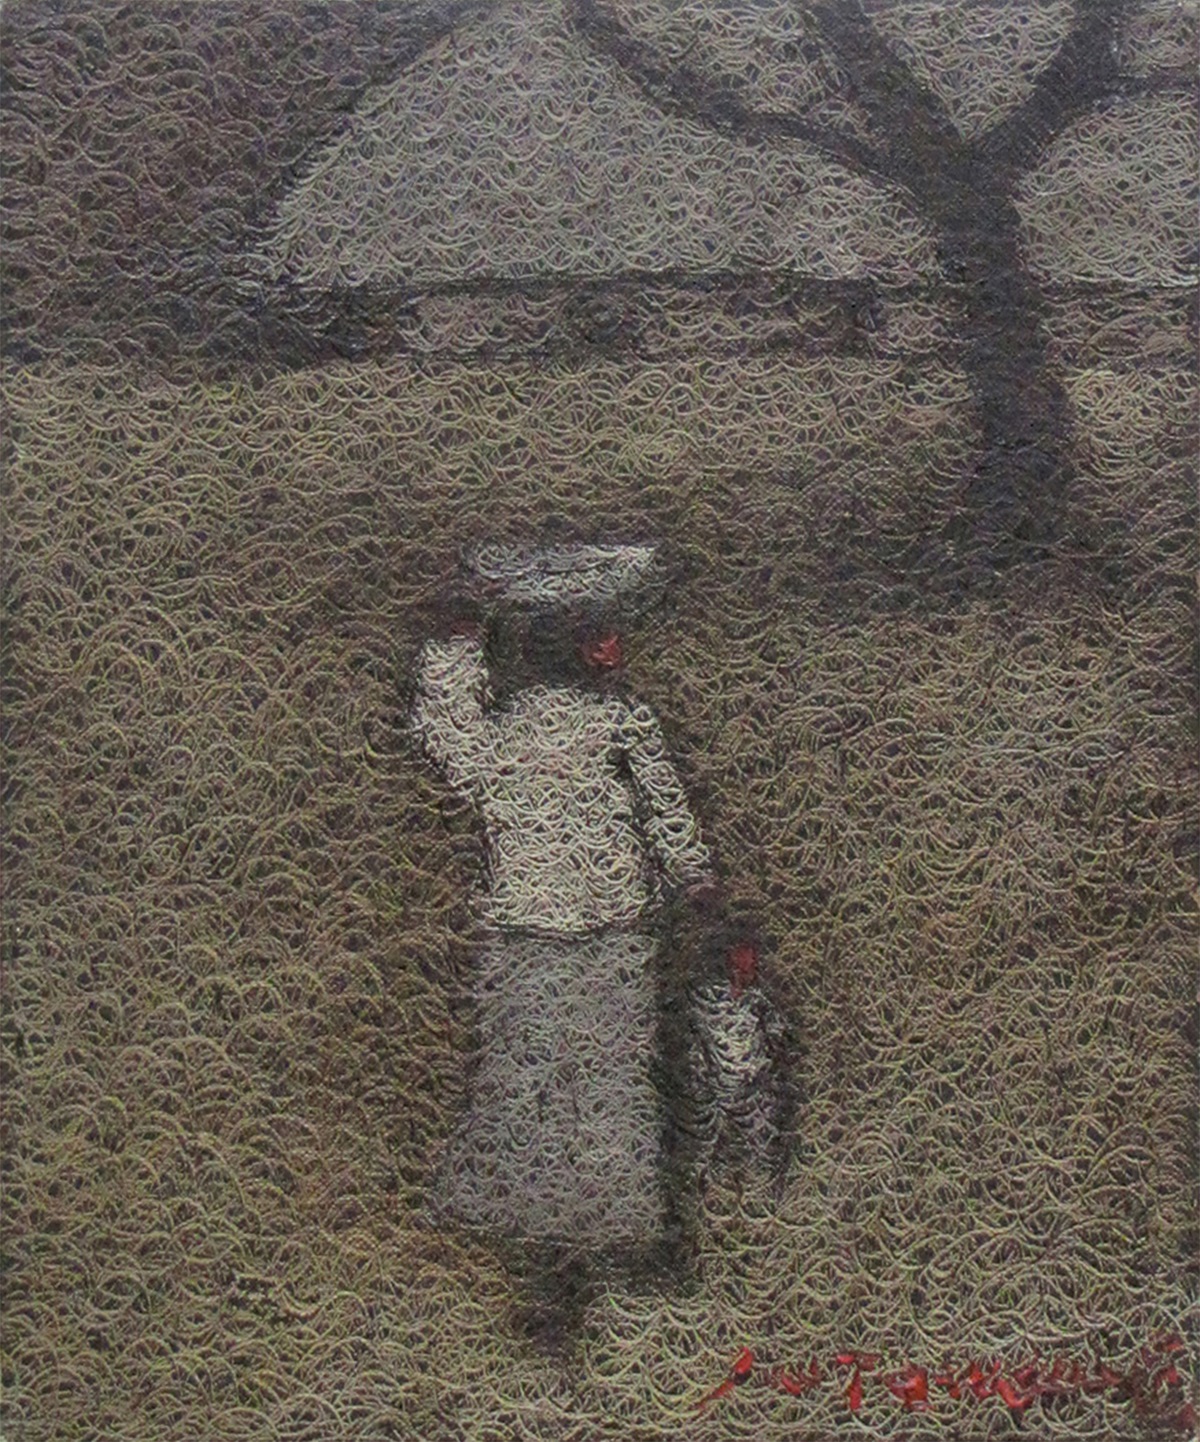 The Sounds-모정, 46×38㎝ oil on canvas, 2006